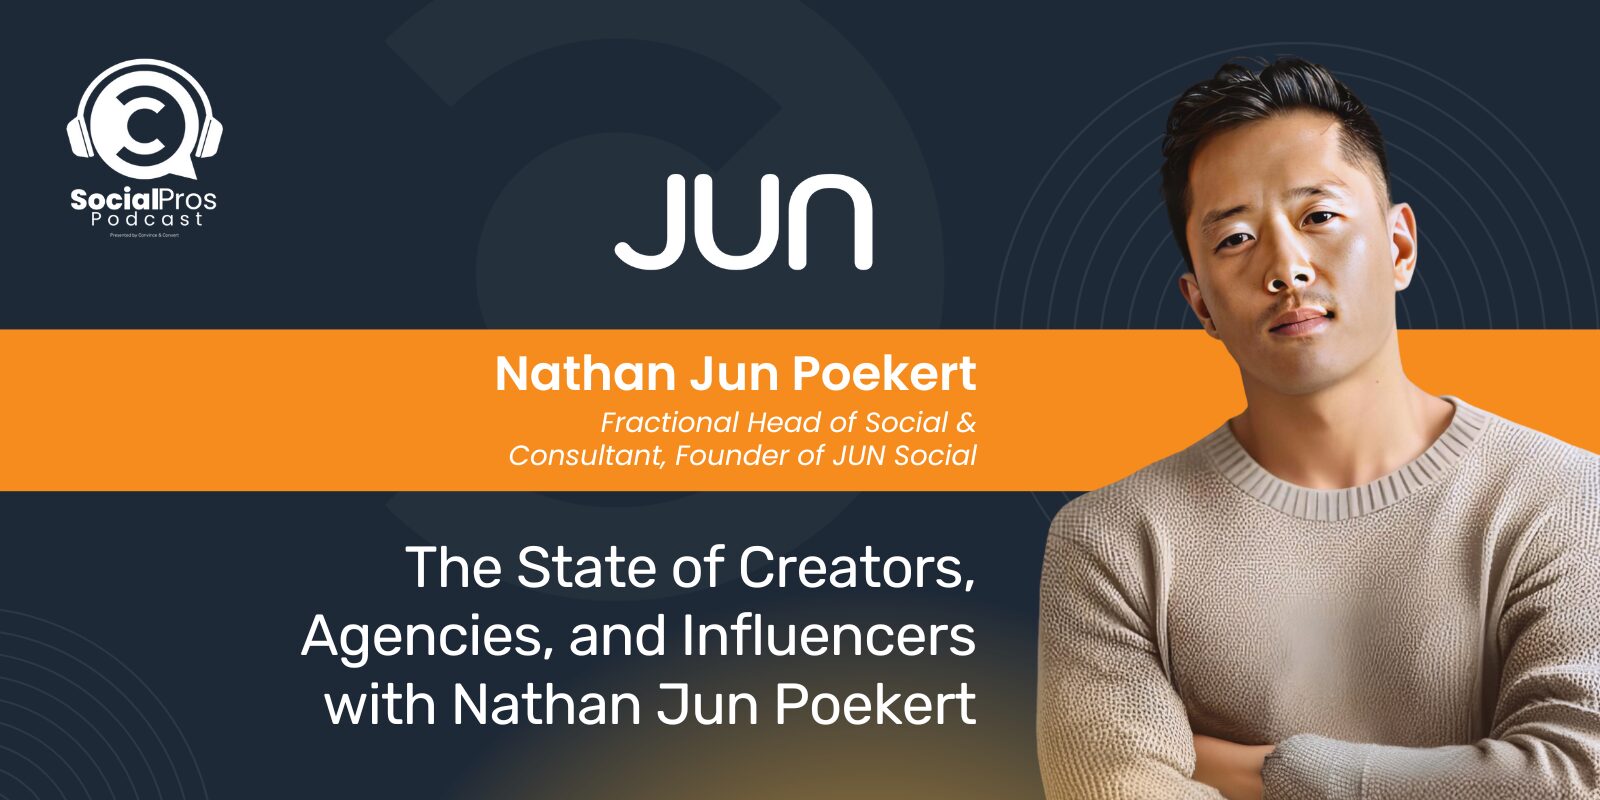 Nathan Jun Poekert